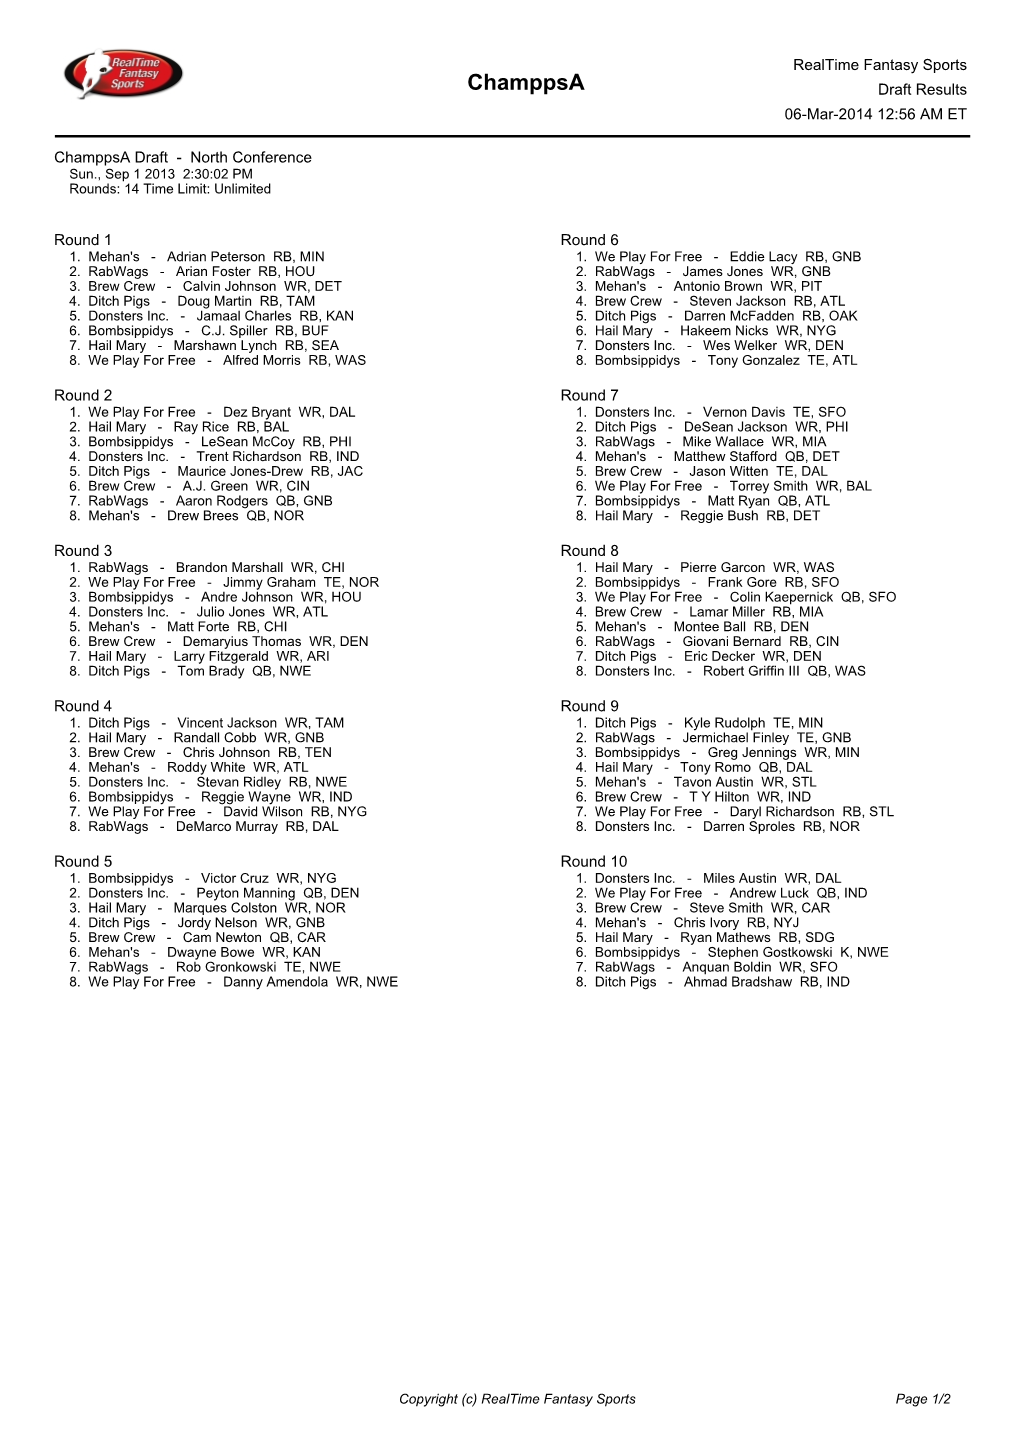 Champpsa Draft Results 06-Mar-2014 12:56 AM ET